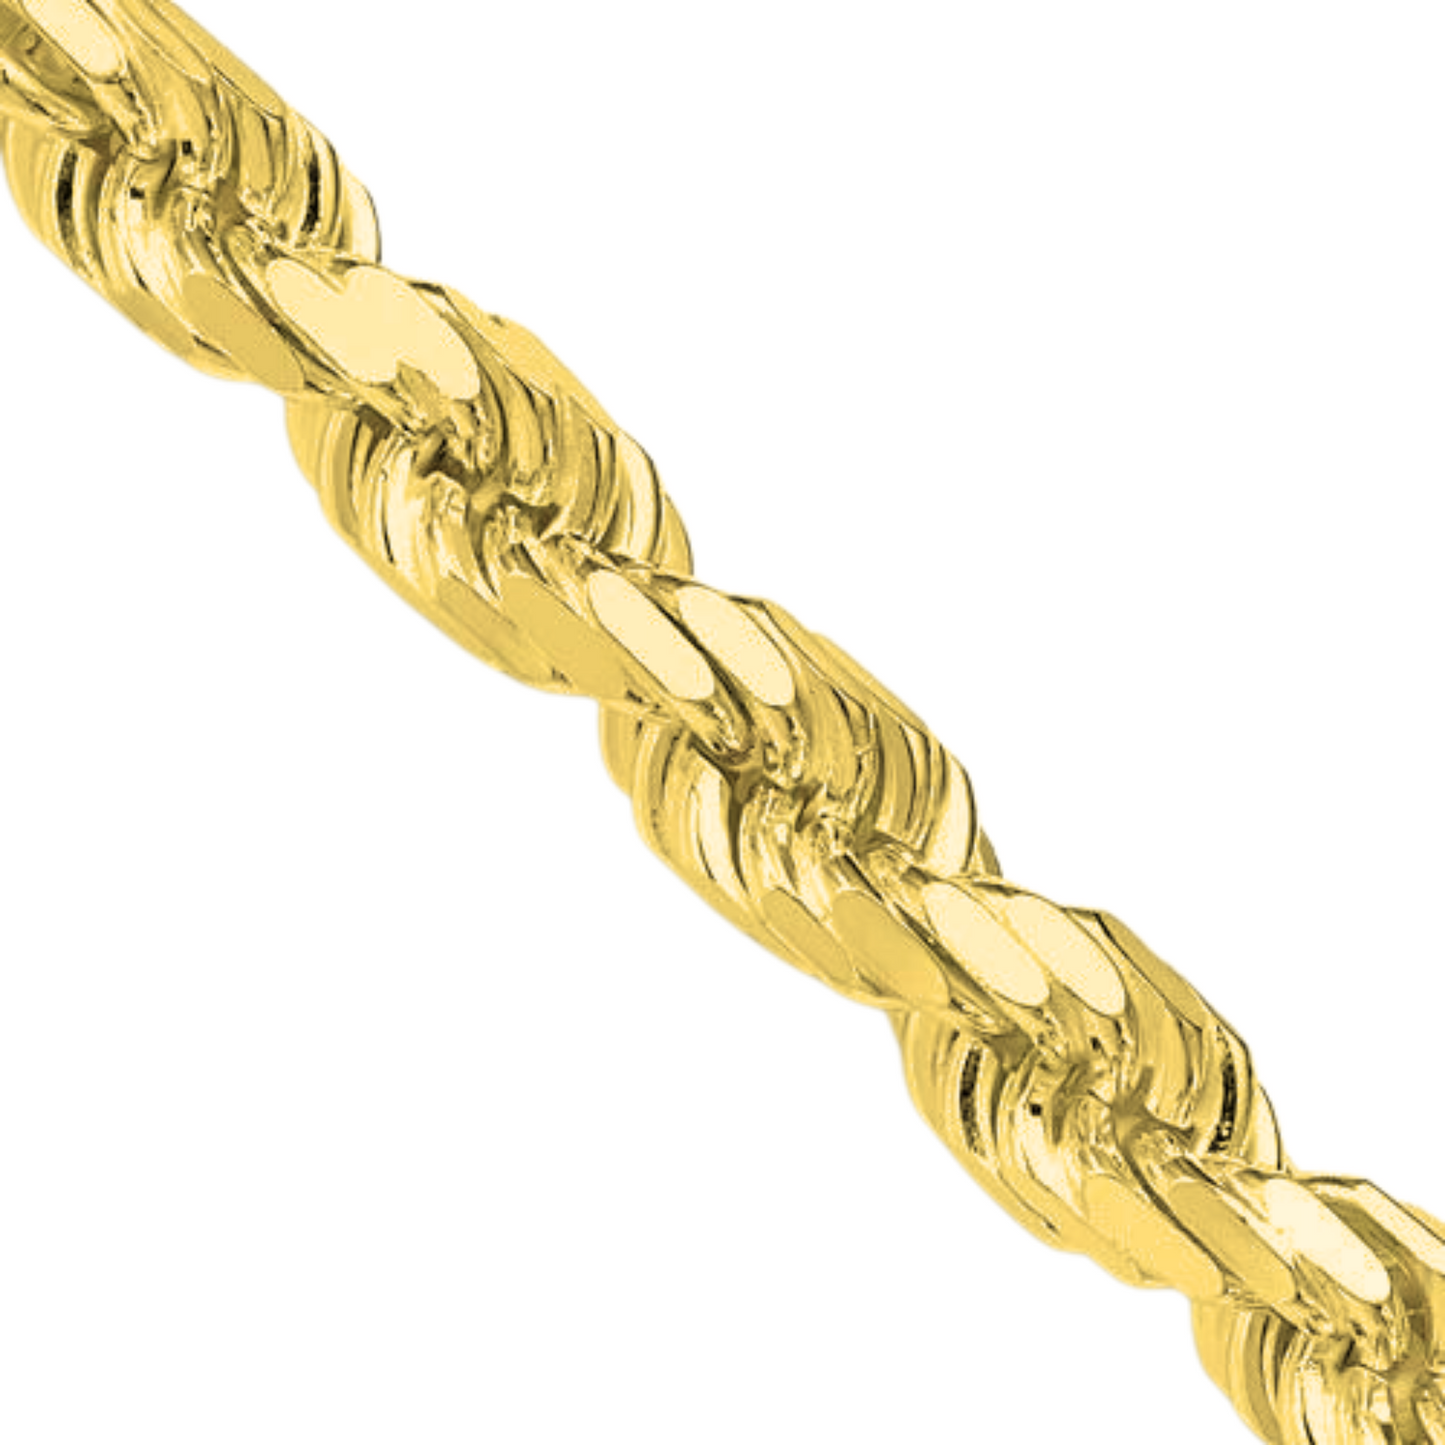 Silver Chain - Mens Gold Chain / Rope Chain